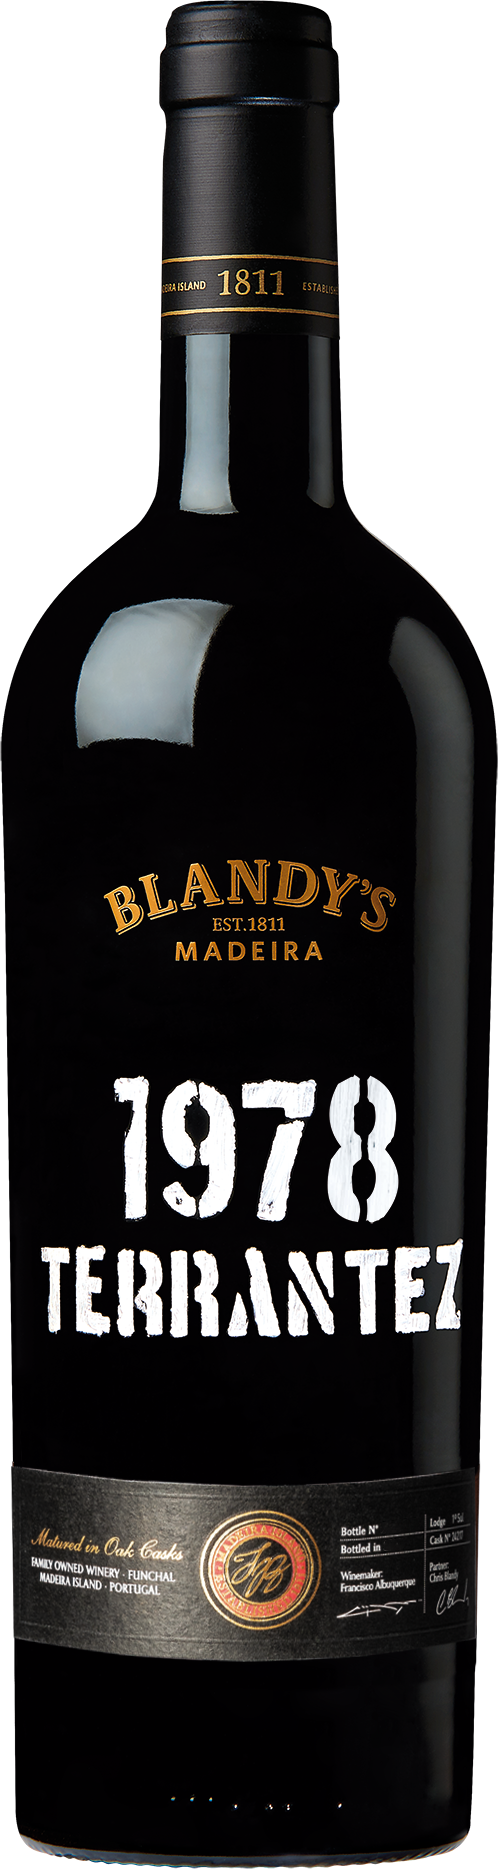 Product Image for BLANDY'S VINTAGE TERRANTEZ 1978